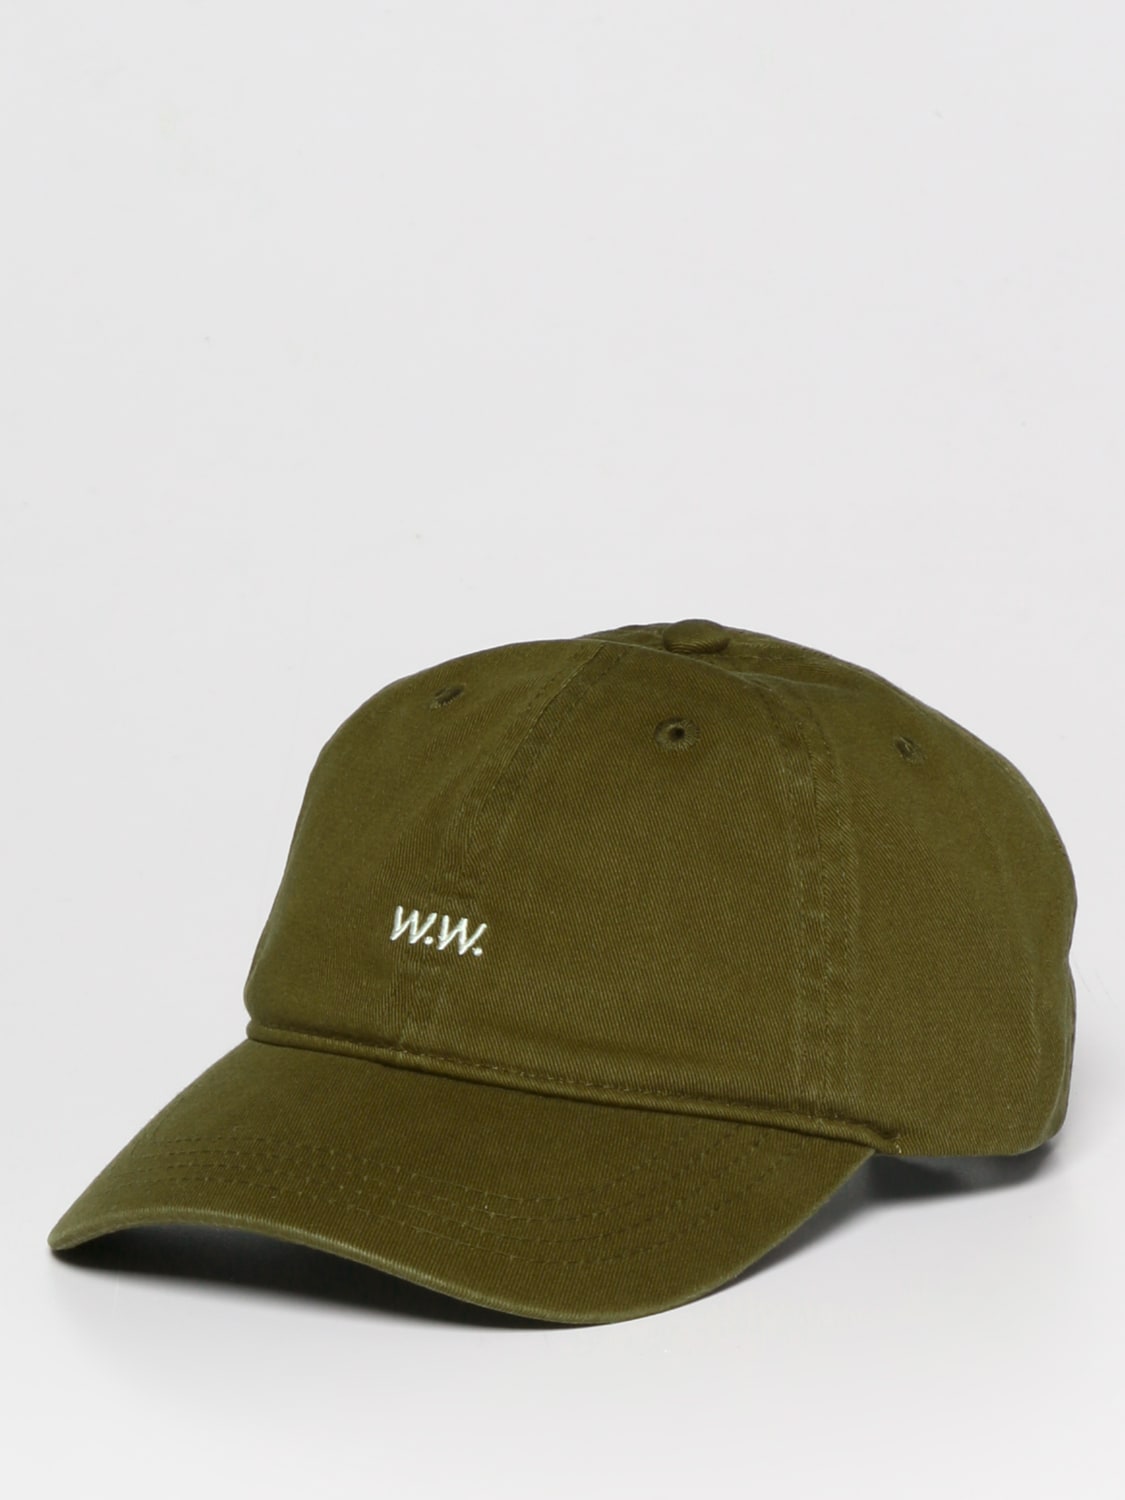 WOOD WOOD: Brown man - 121108047083 hat for Wood Wood hat at online 